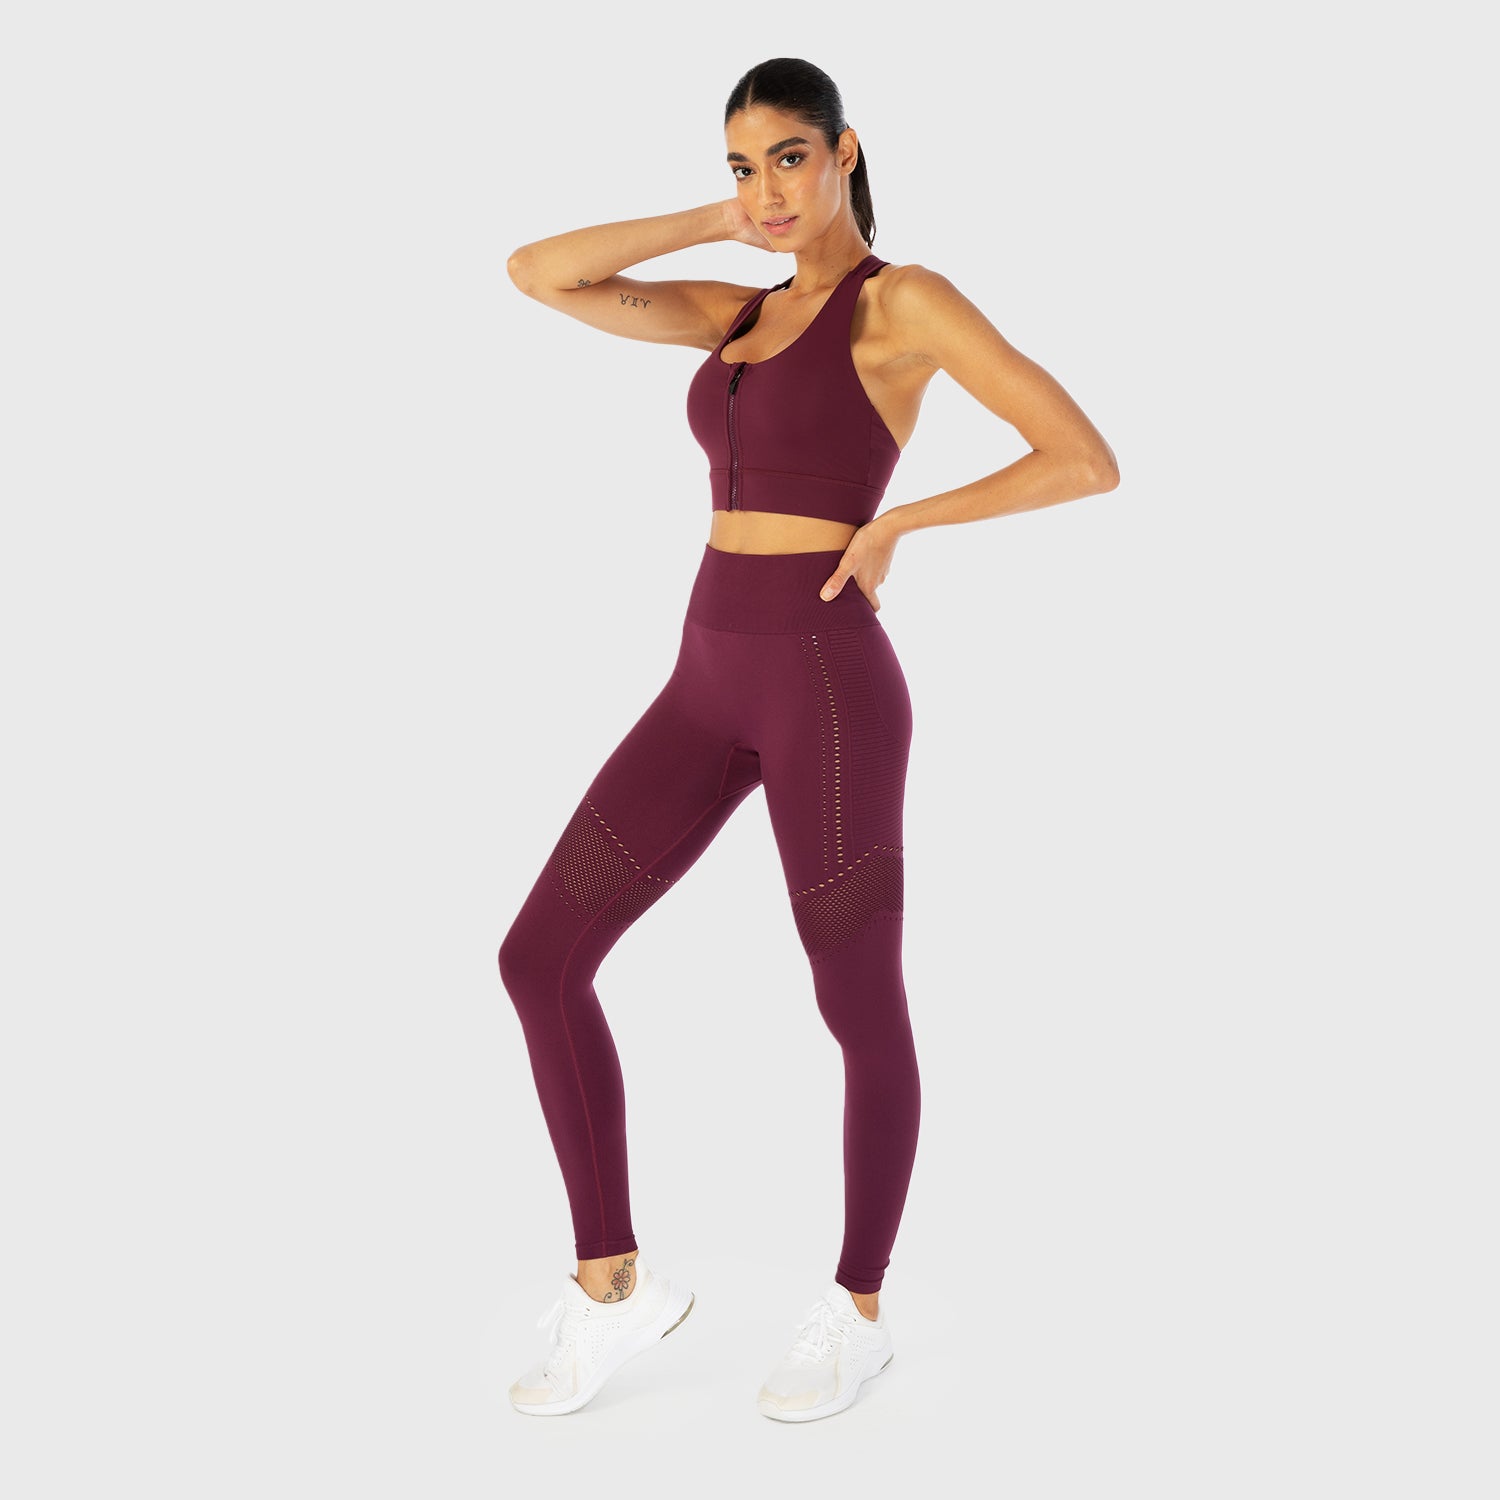 squatwolf-infinity-seamless-workout-leggings-purple-gym-leggings-for-women